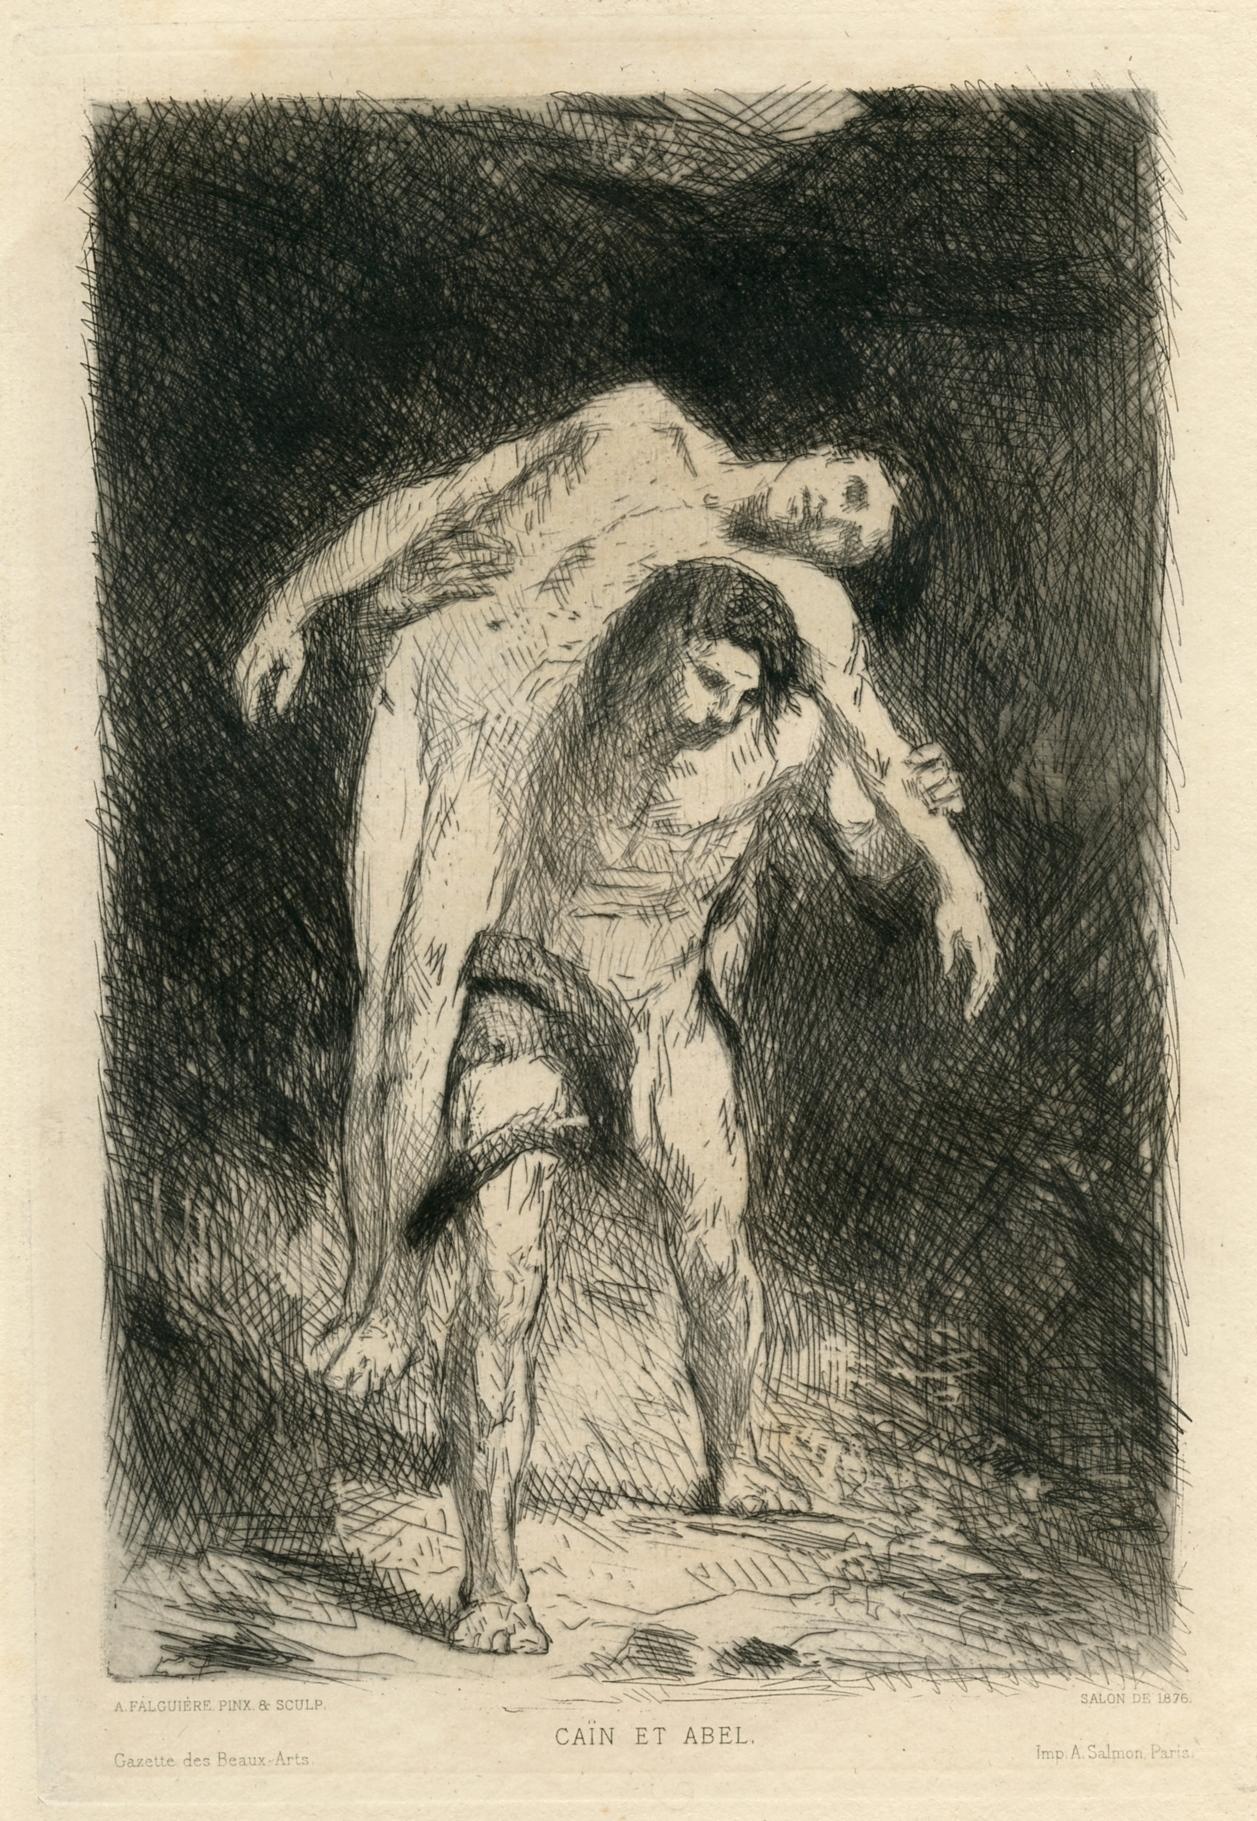 "Cain and Abel" original etching - Print by Alexandre Falguière